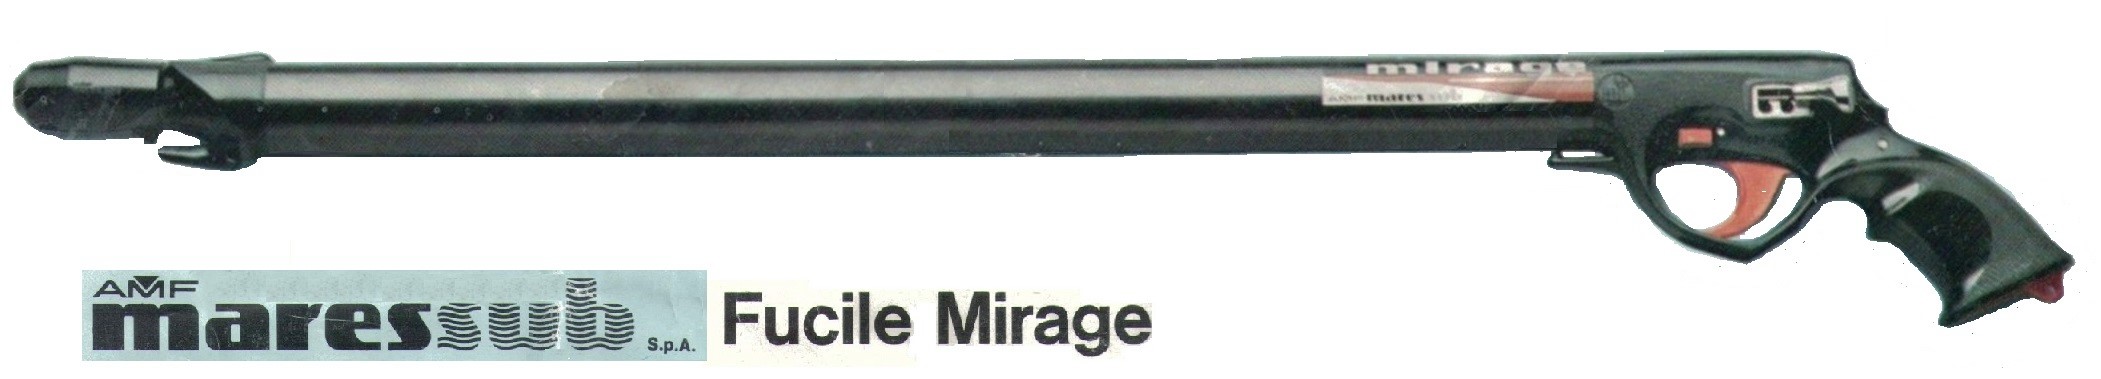 Mirage as originally produced.jpg